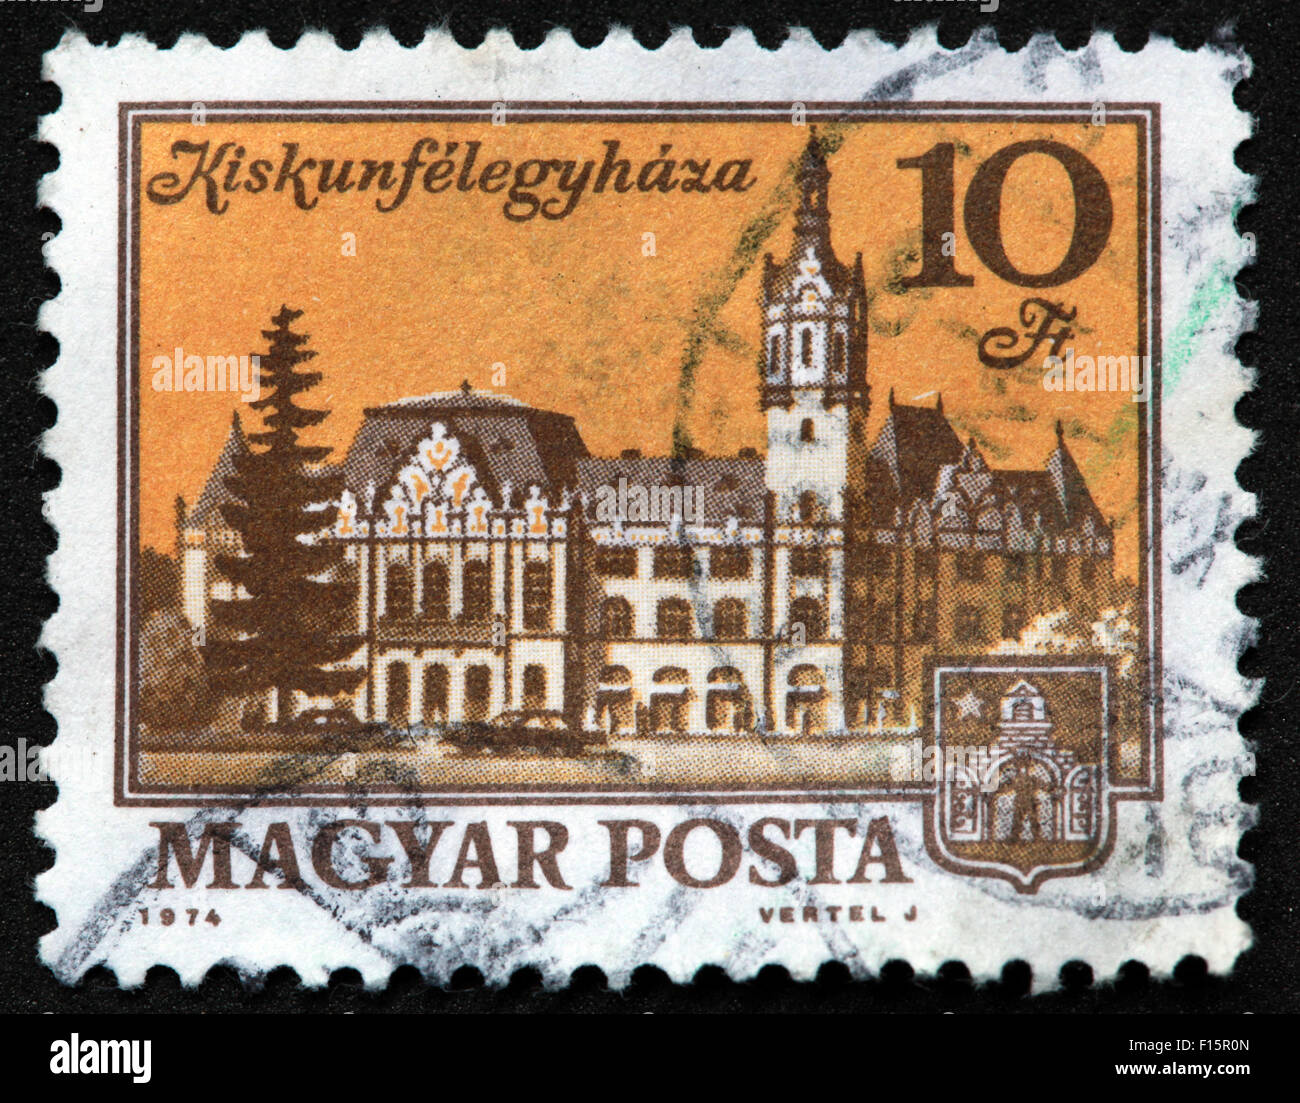 Magyar Posta 1974 Vertel J Kiskunfelegyhaza 10ft Castle House Stamp, Ungarn Stockfoto